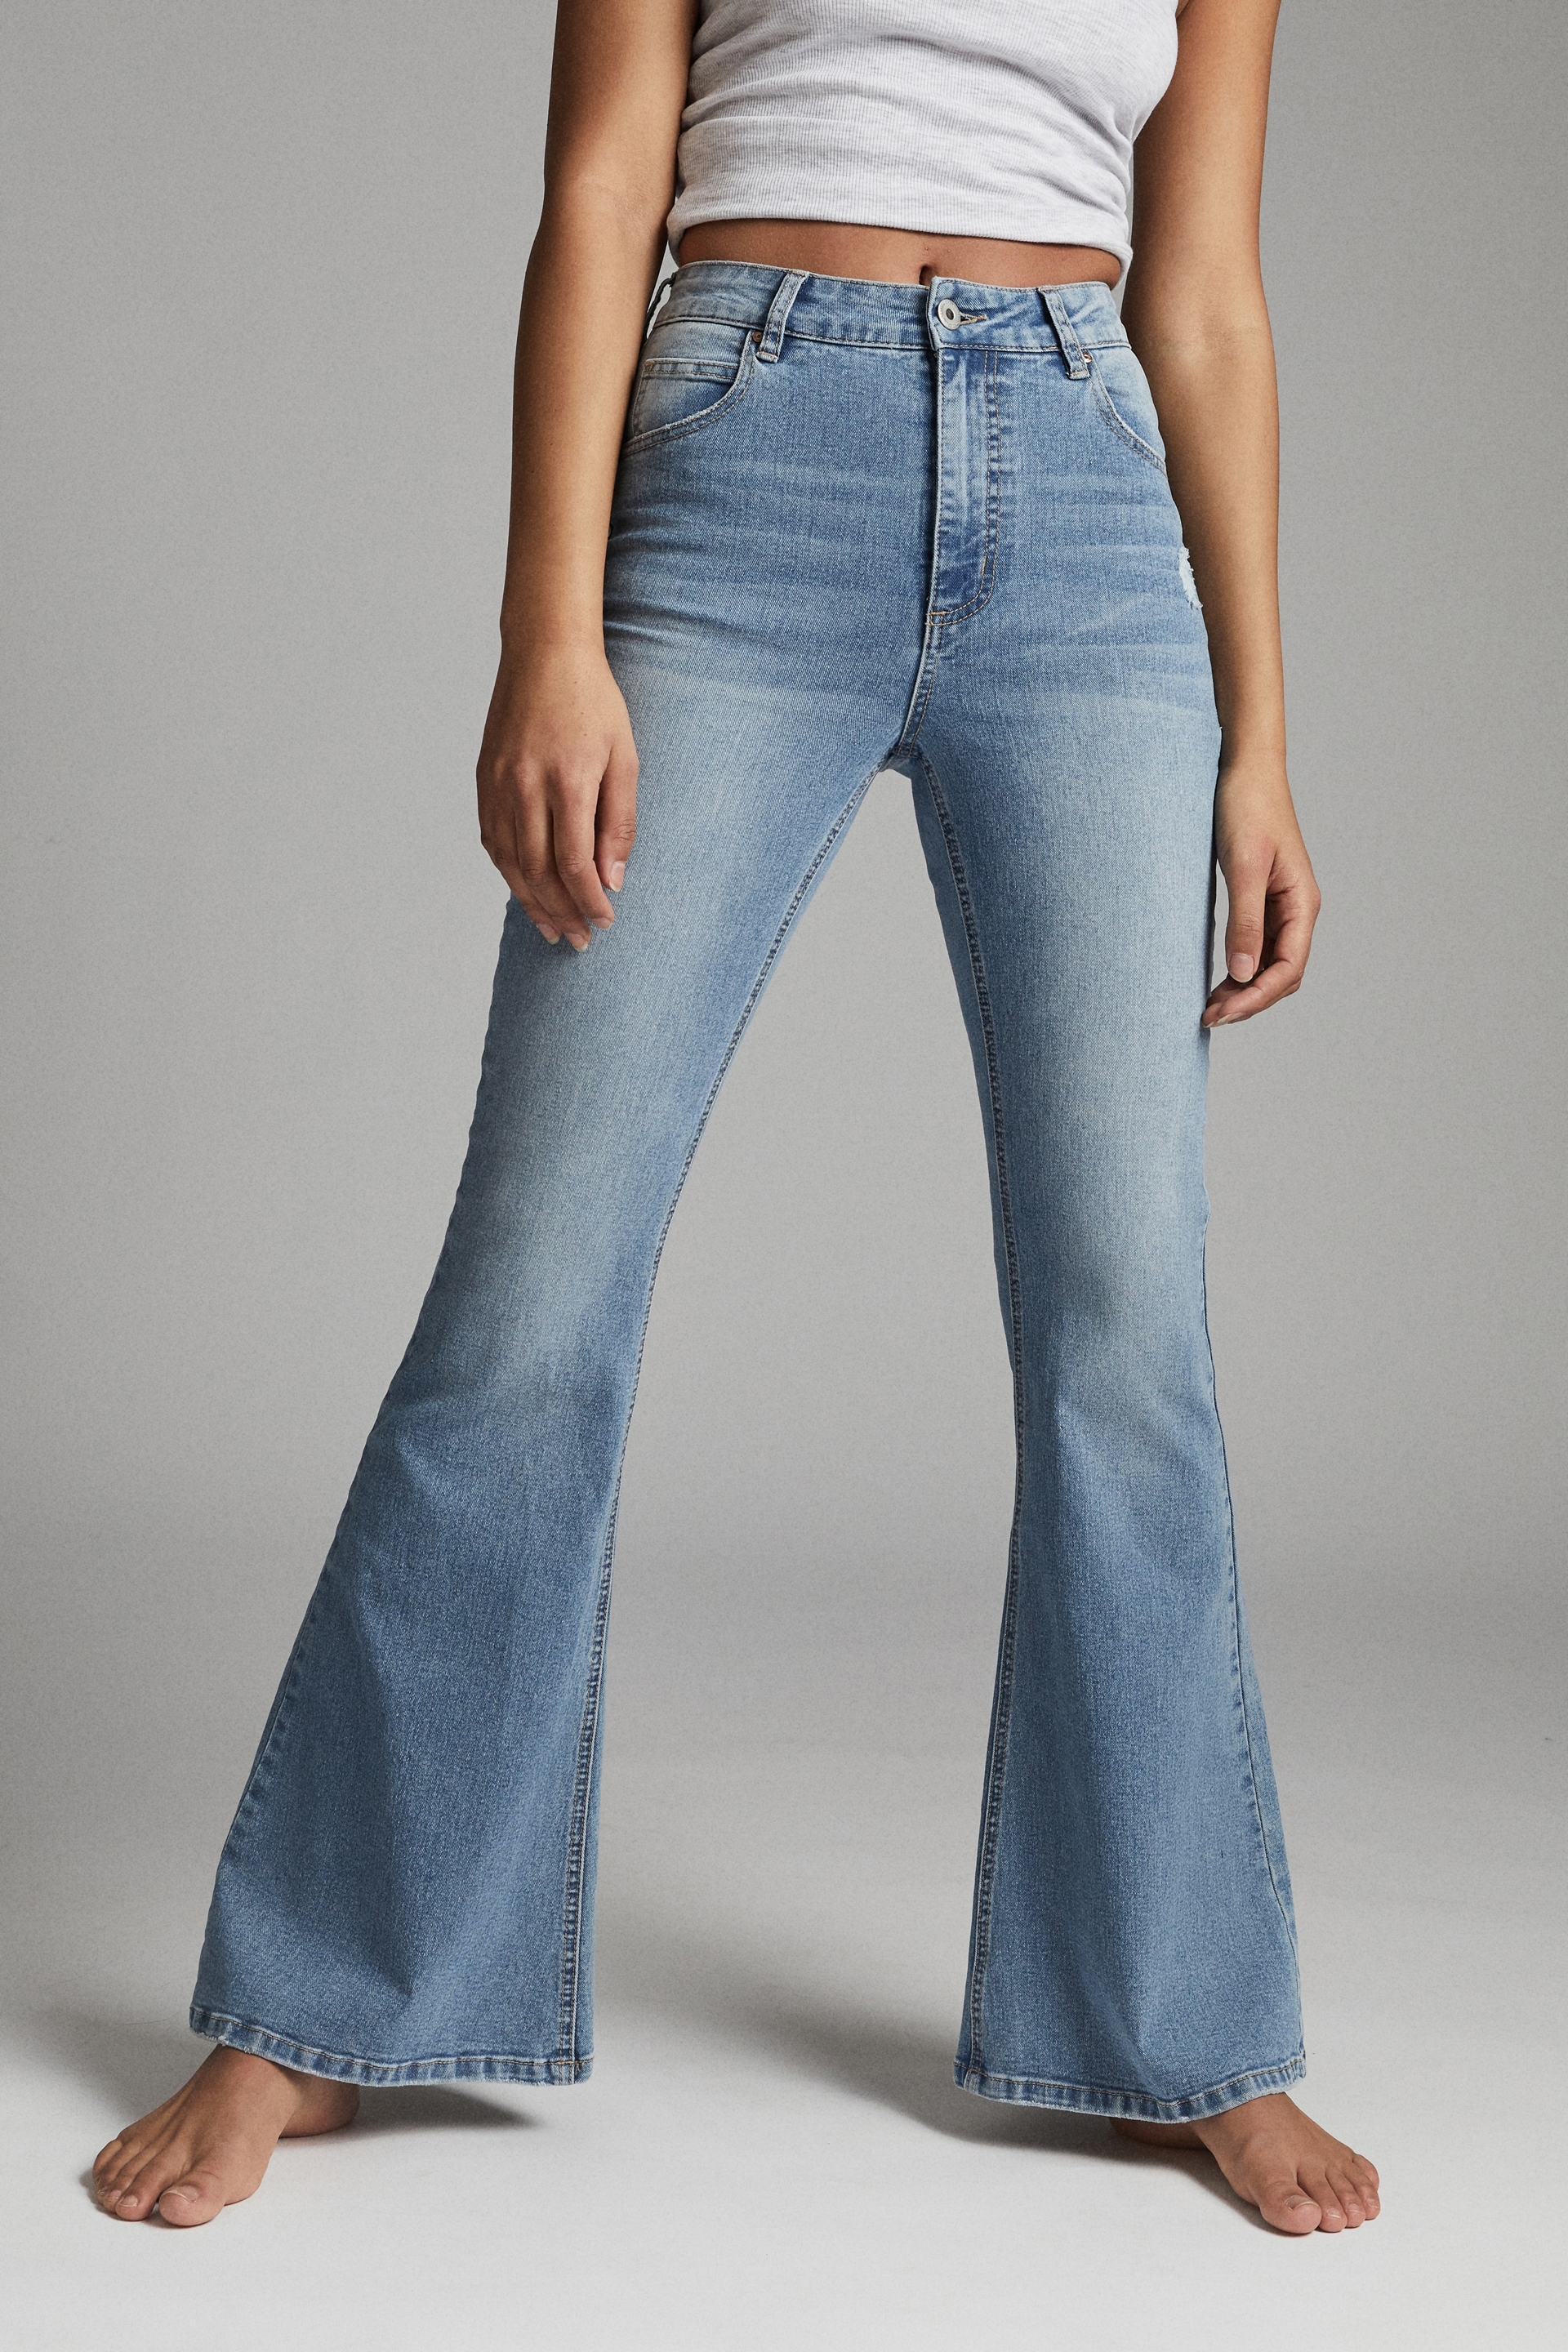 flare jeans australia